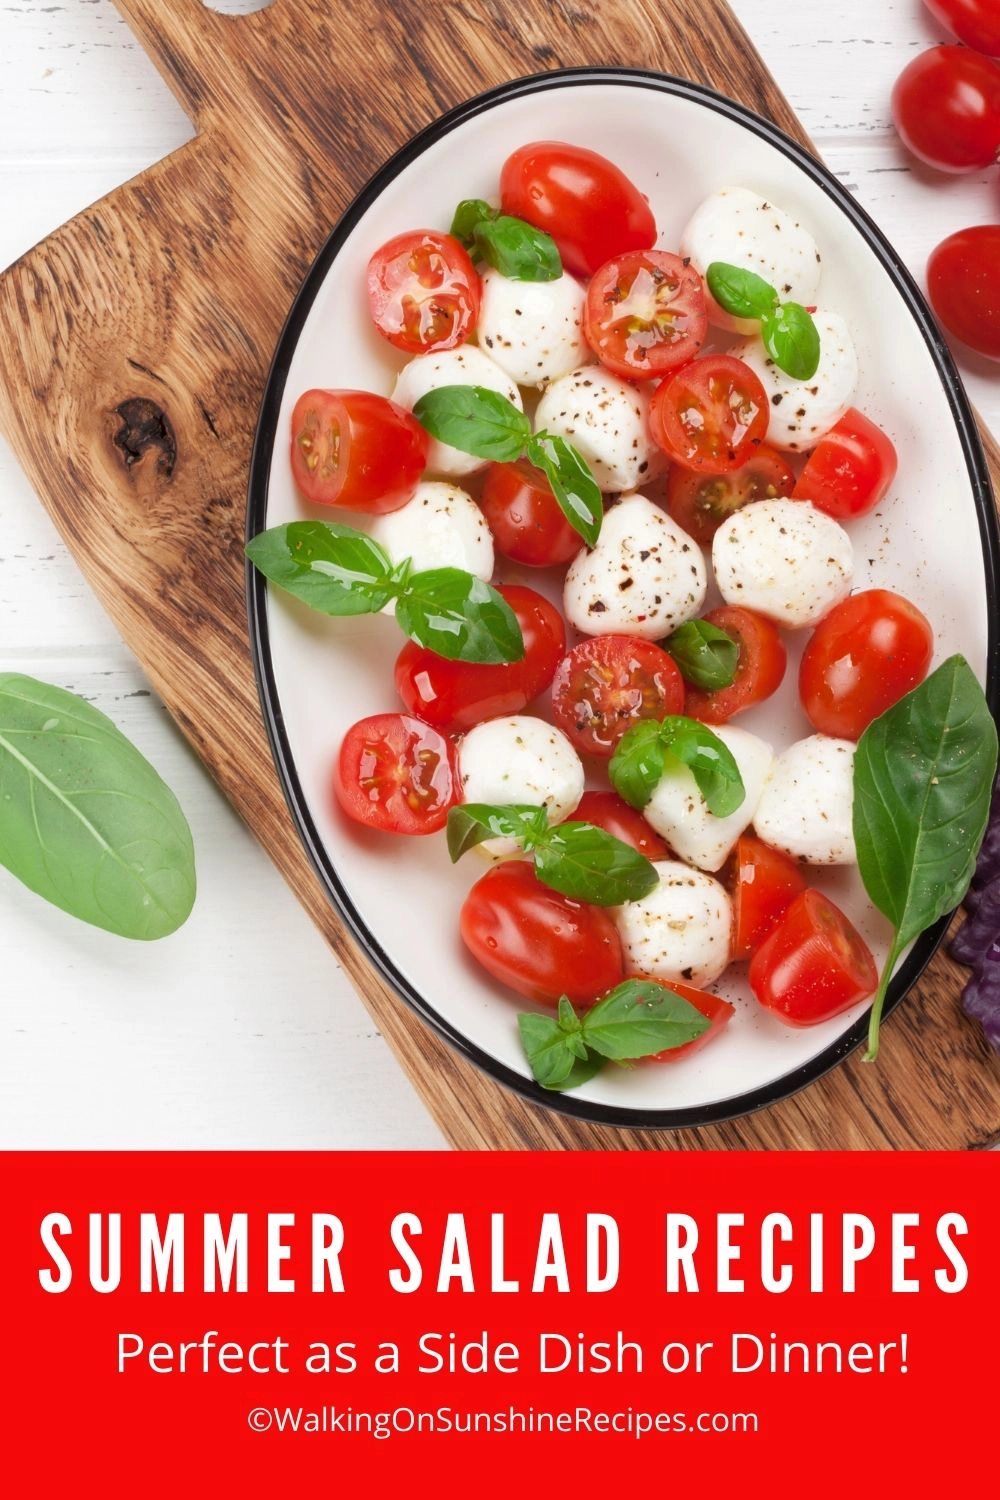 Tomato, mozzarella, basil leaves. Caprese salad on a plate. 